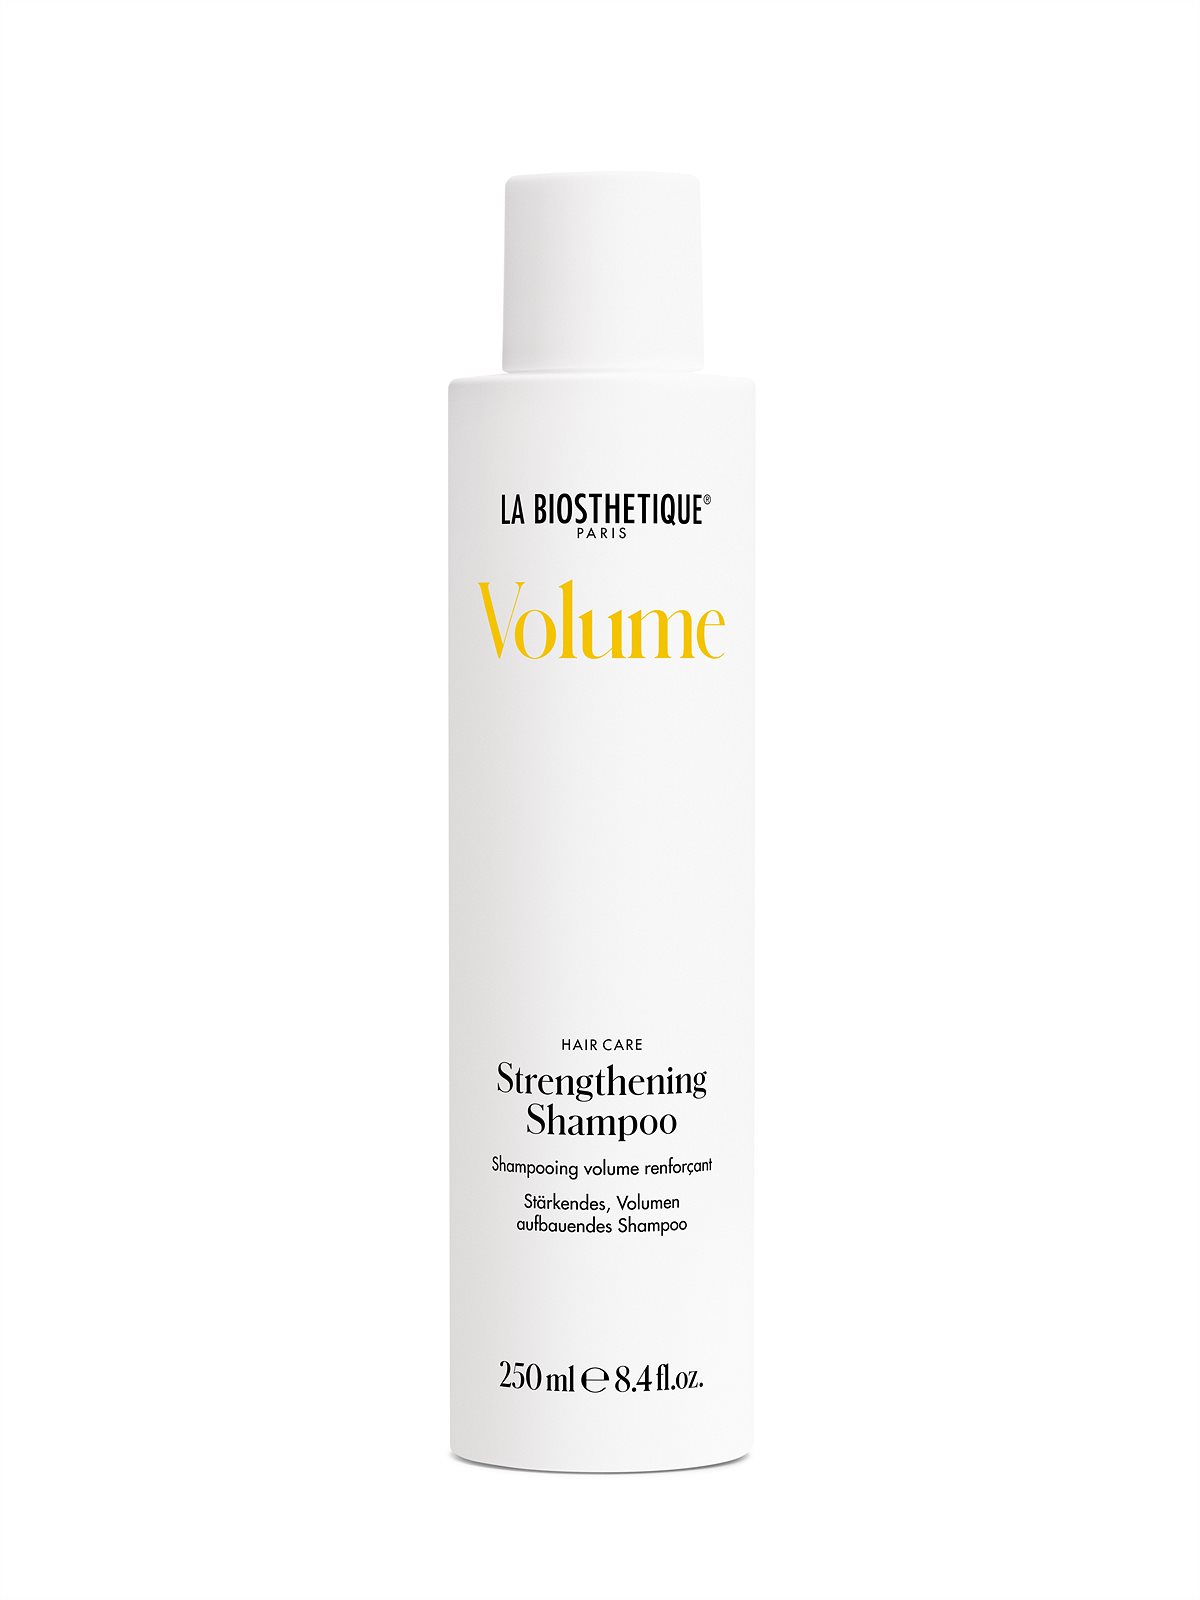 La-Biosthetique_Volume Strengthening Shampoo-250ml_23,00 € (UVP)